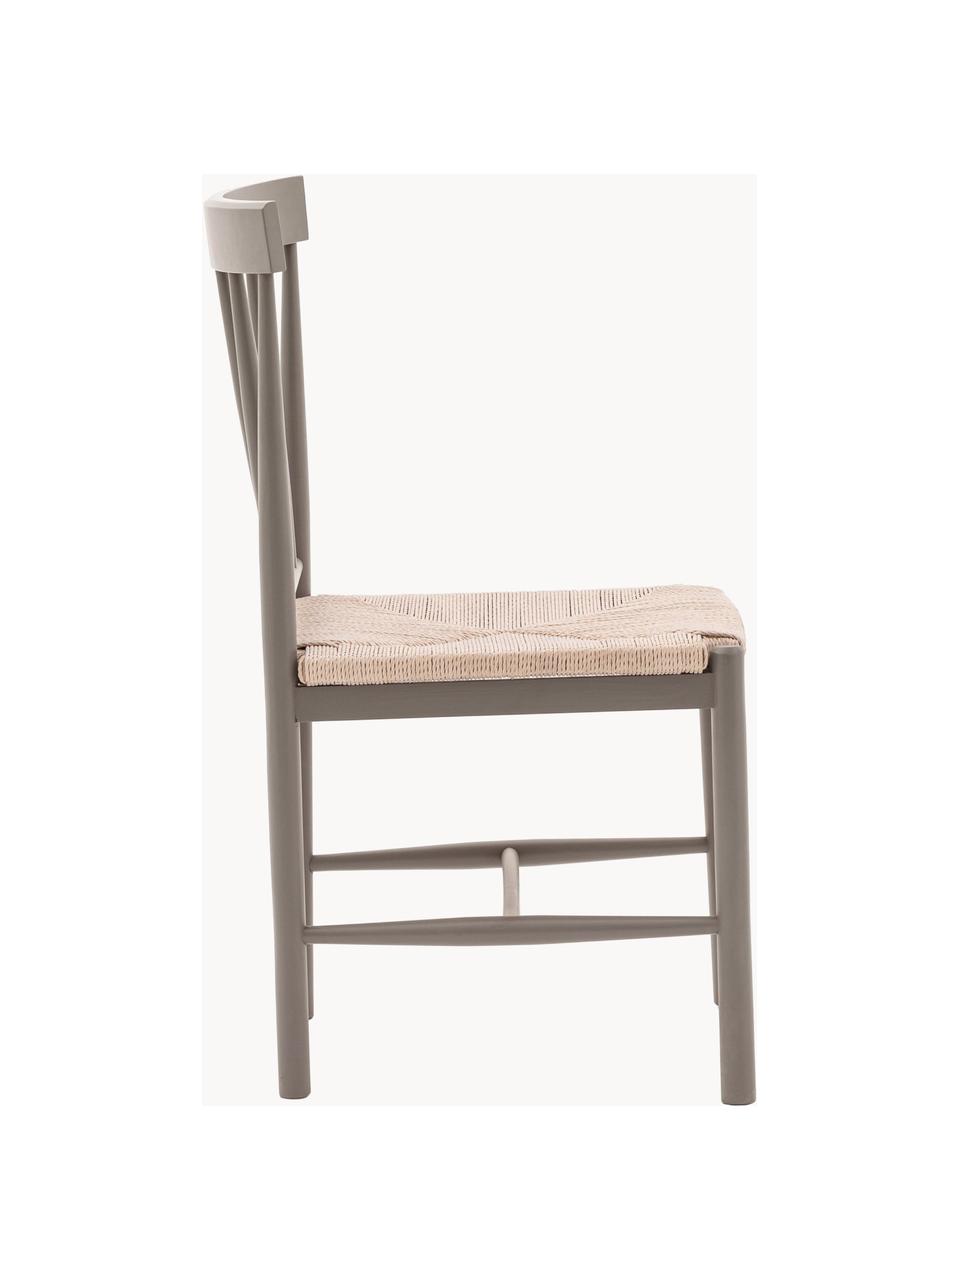 Drevená stolička Eton, 2 ks, Sivobéžová, svetlobéžová, Š 46 x H 45 cm